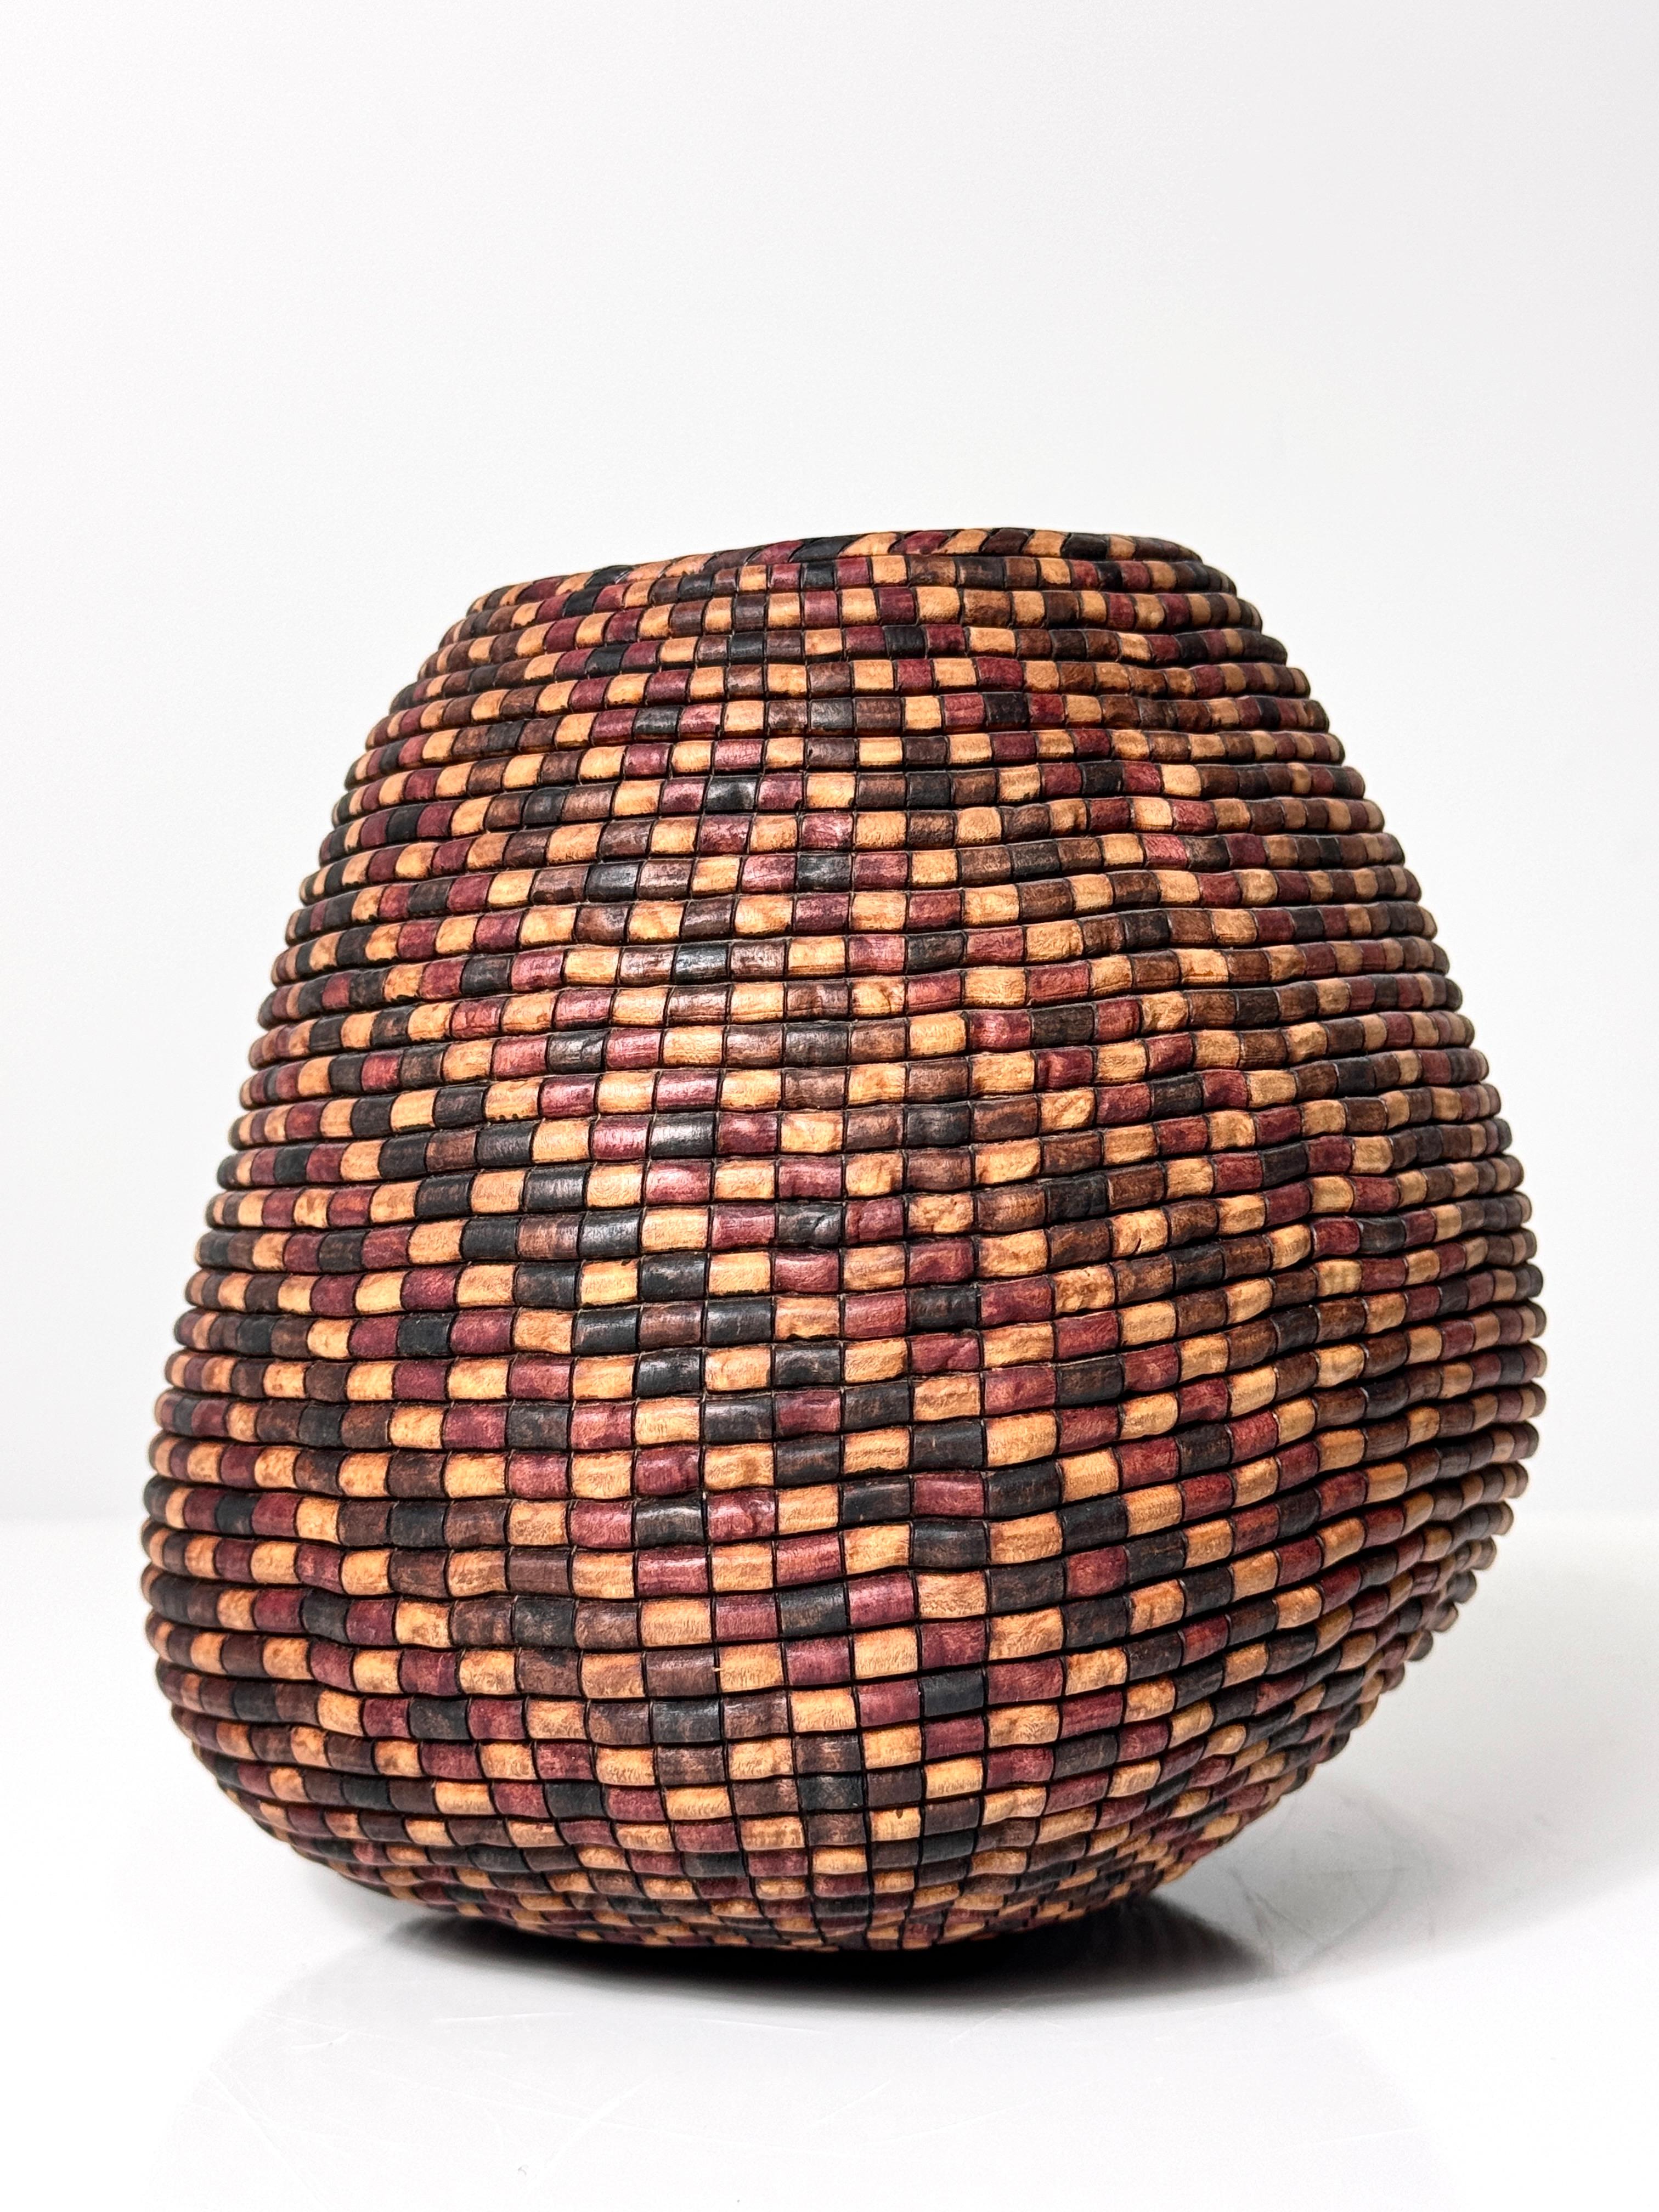 Organic Modern American Studio Turned Wood Basket Illusion Vessel Bowl by David Nittmann 1990s For Sale